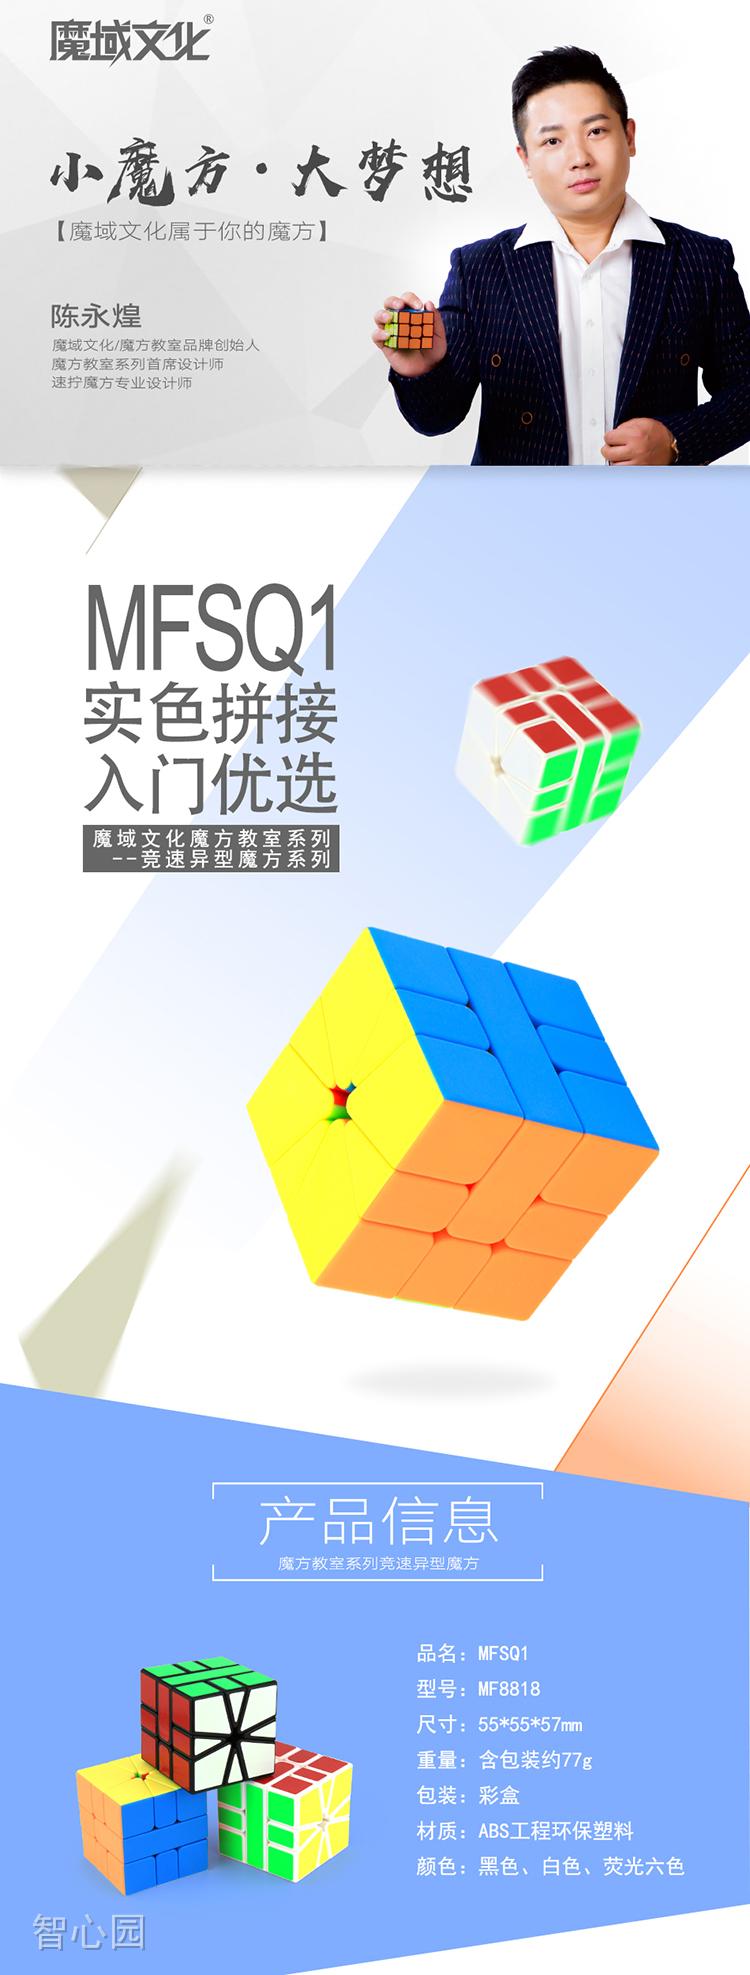 MFSQ1_01.jpg